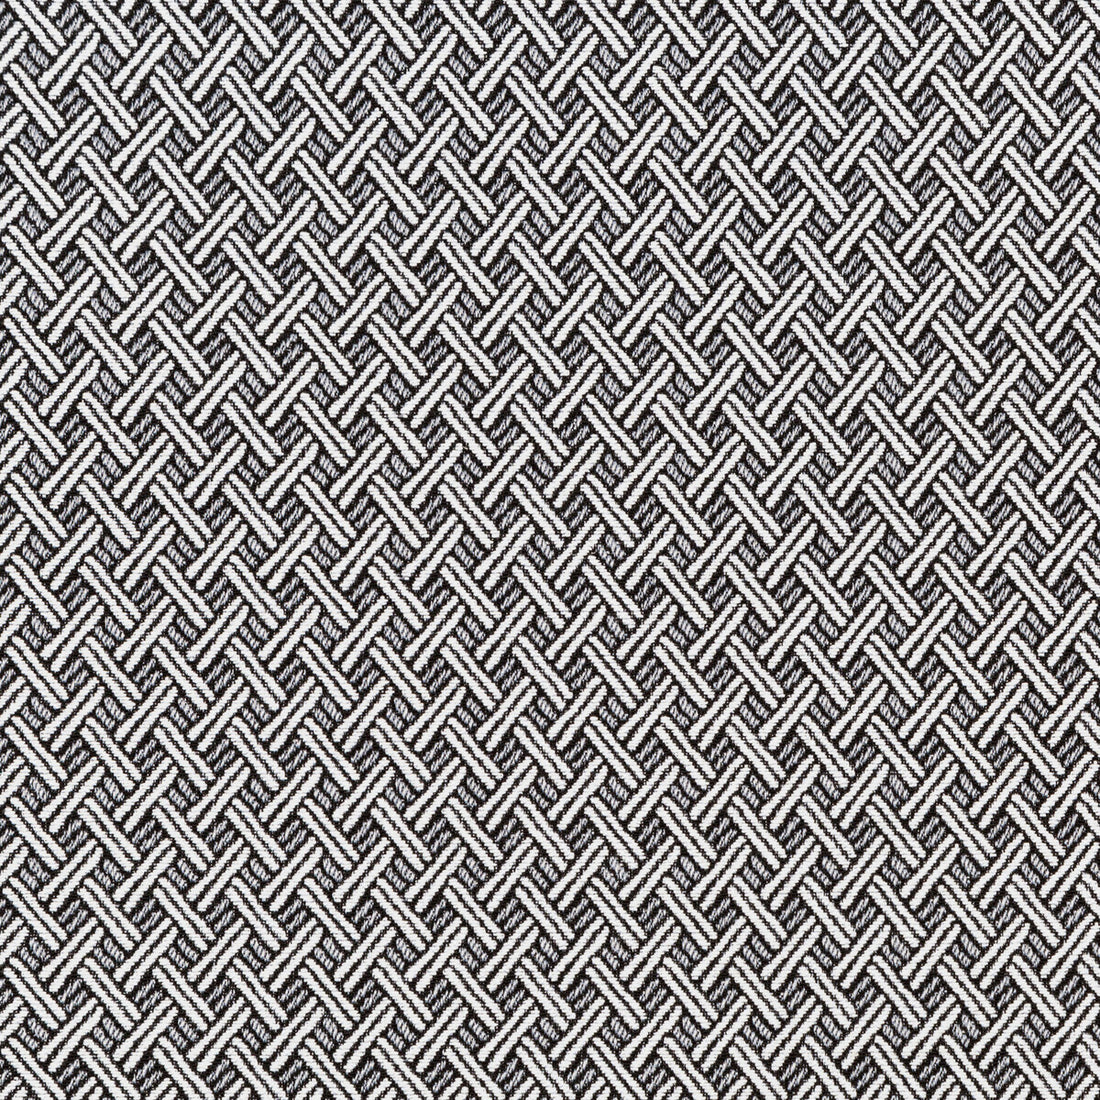 Kravet Smart fabric in 35938-81 color - pattern 35938.81.0 - by Kravet Smart in the Performance Kravetarmor collection